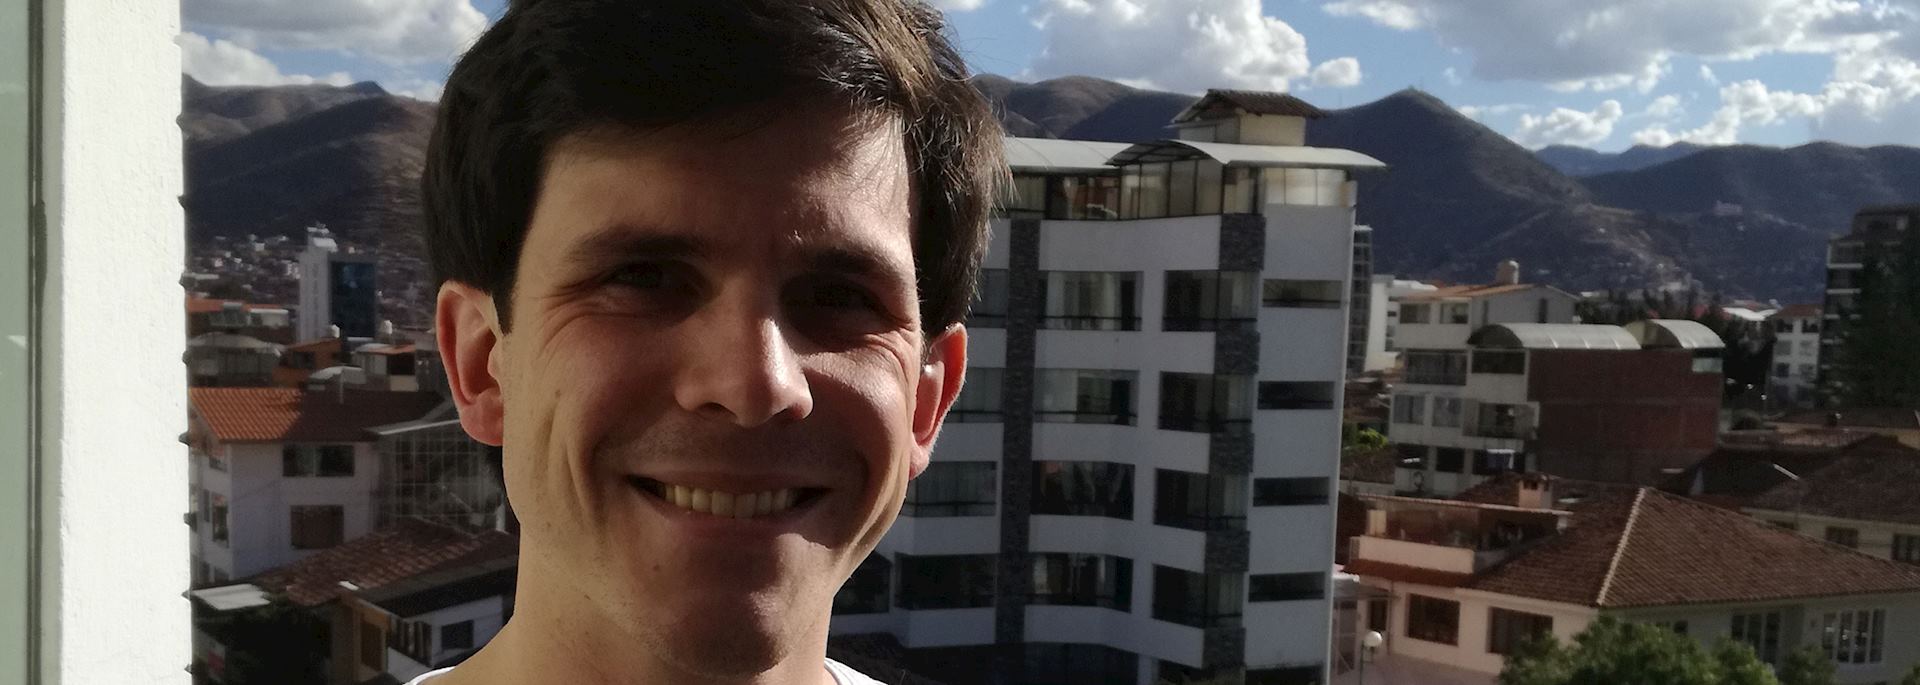 Thomas in Cuzco, Peru